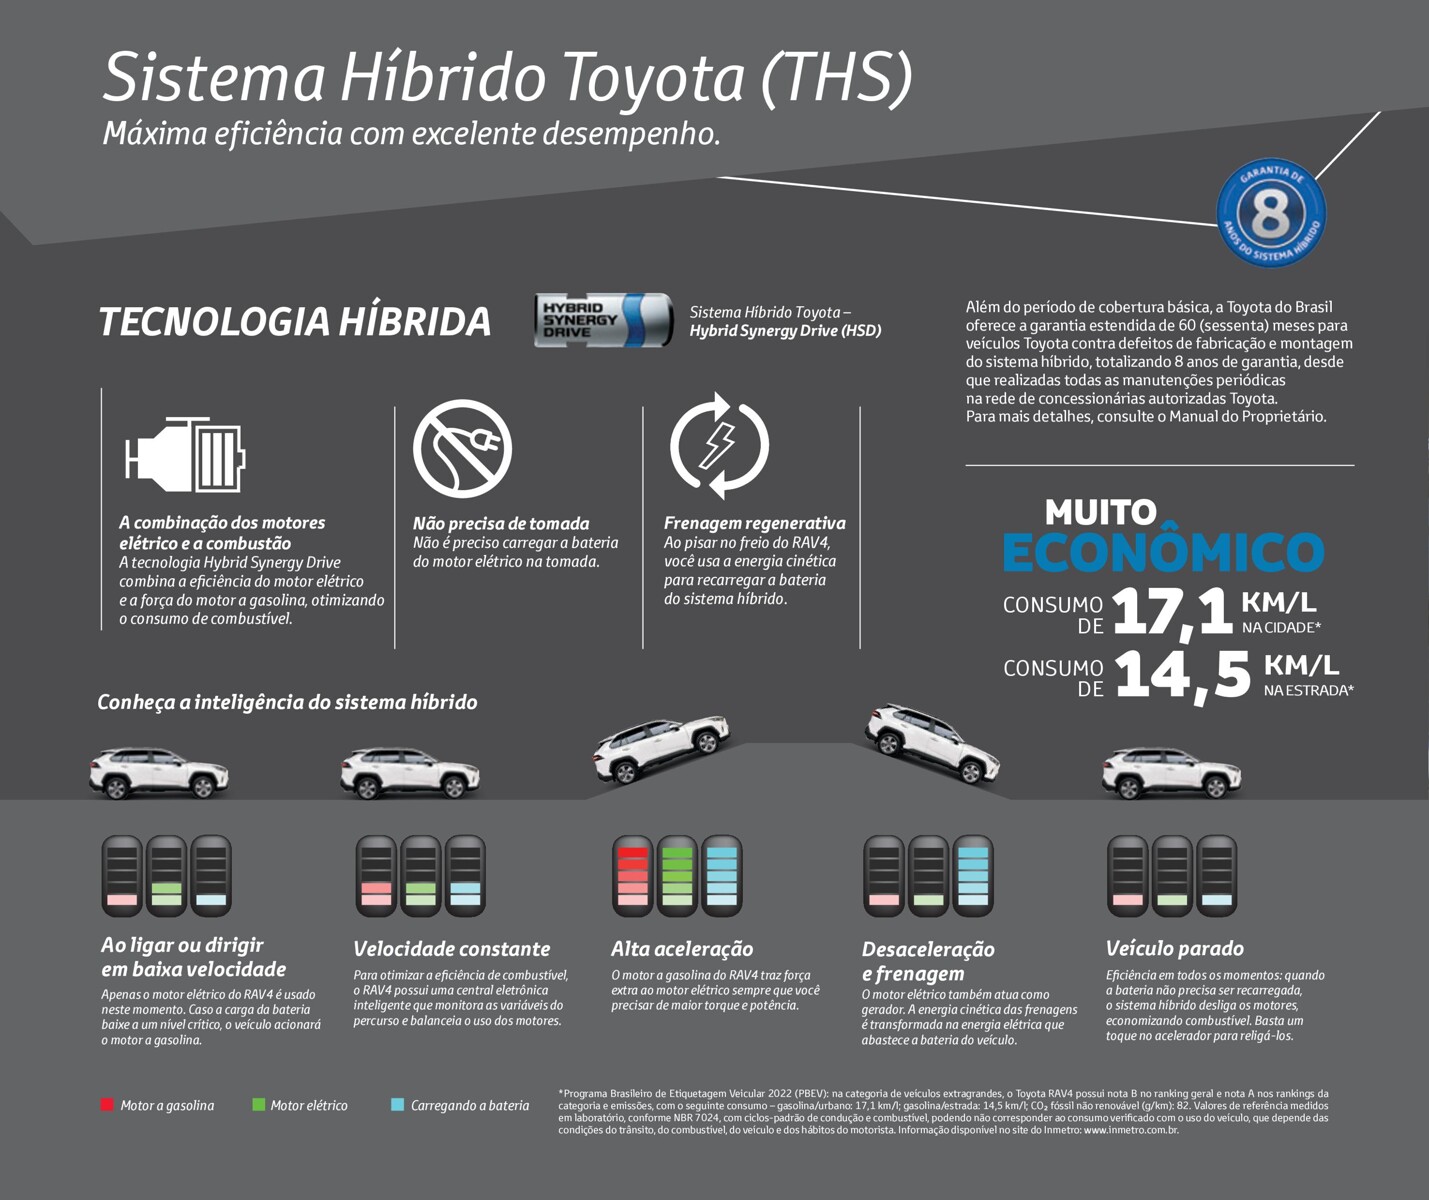 Sistema Híbrido Toyota (THS)